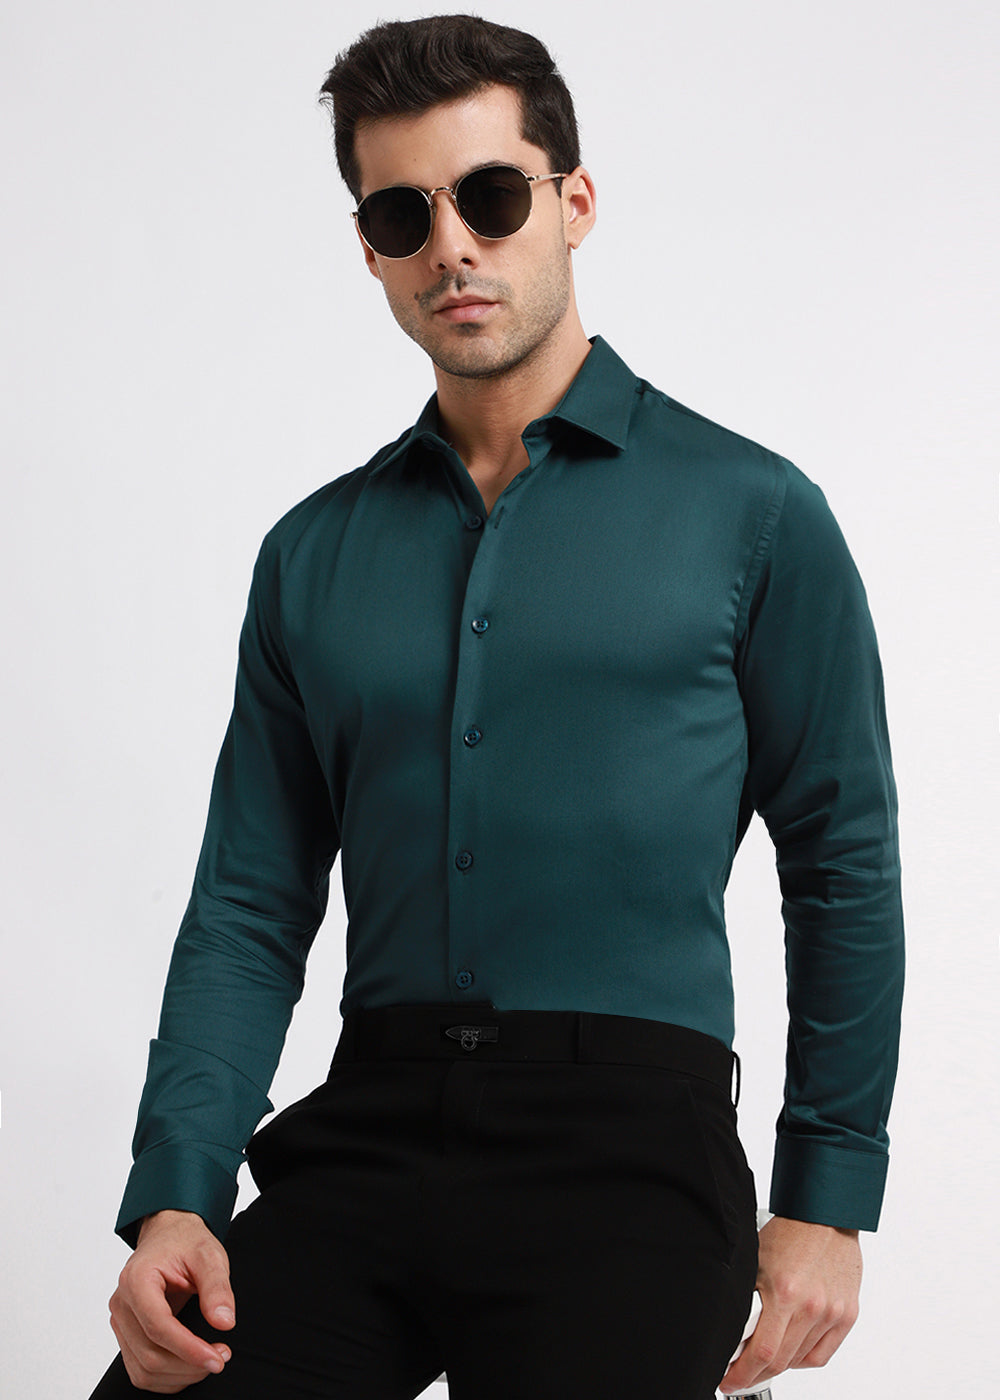 Softcrush Green Satin Shirt